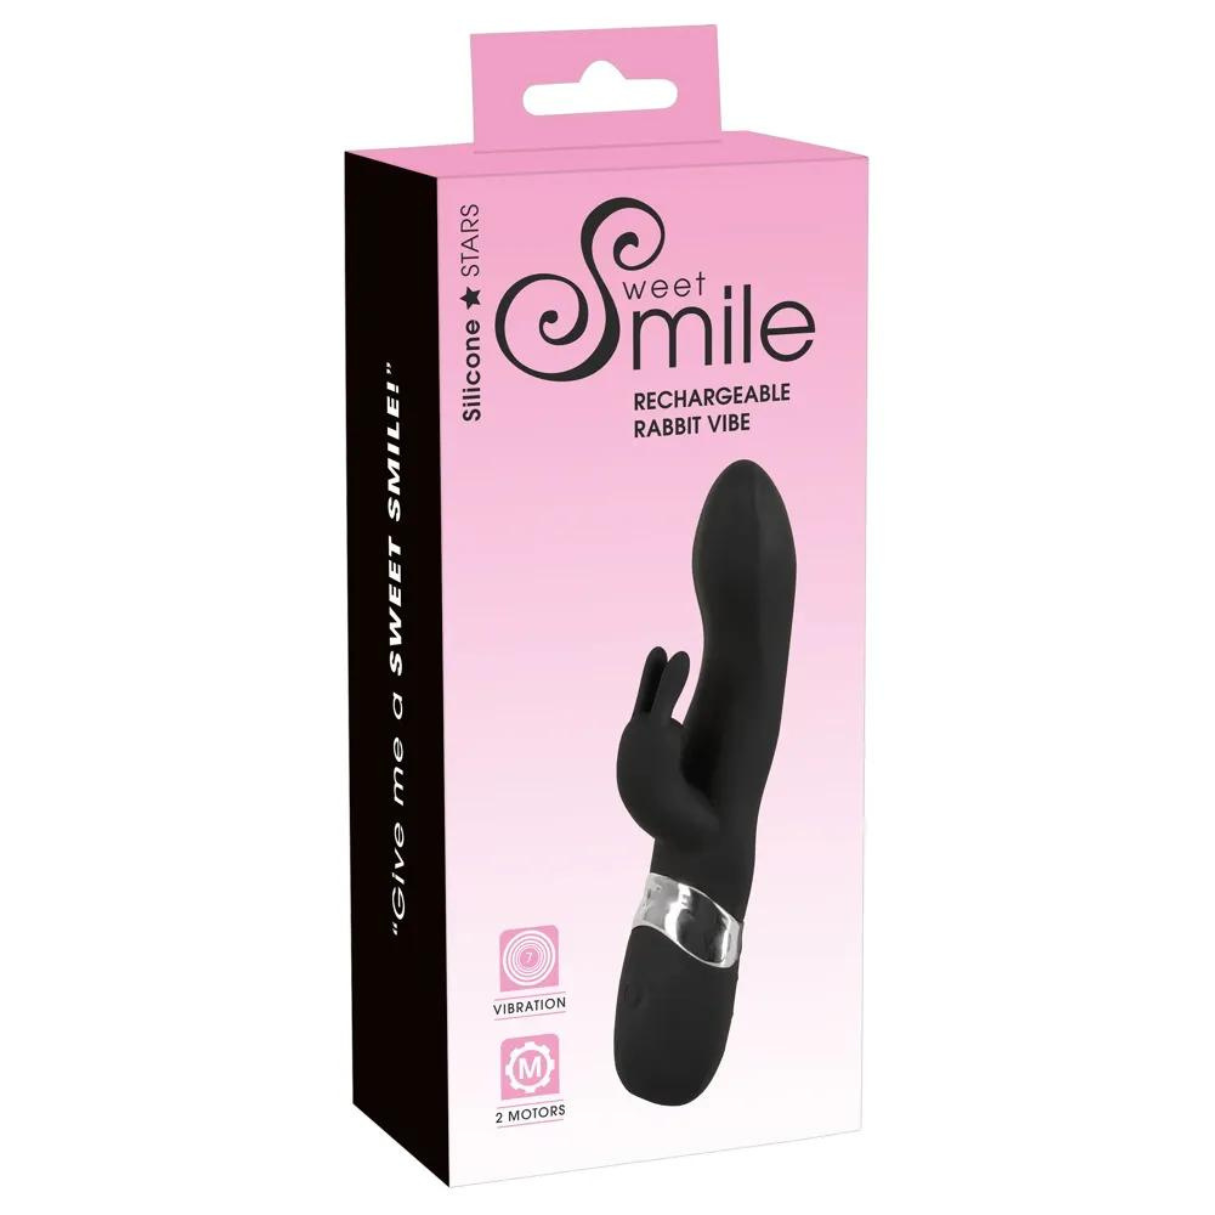 SWEET SMILE Rechargeable Vibrator Rabbit Vibe